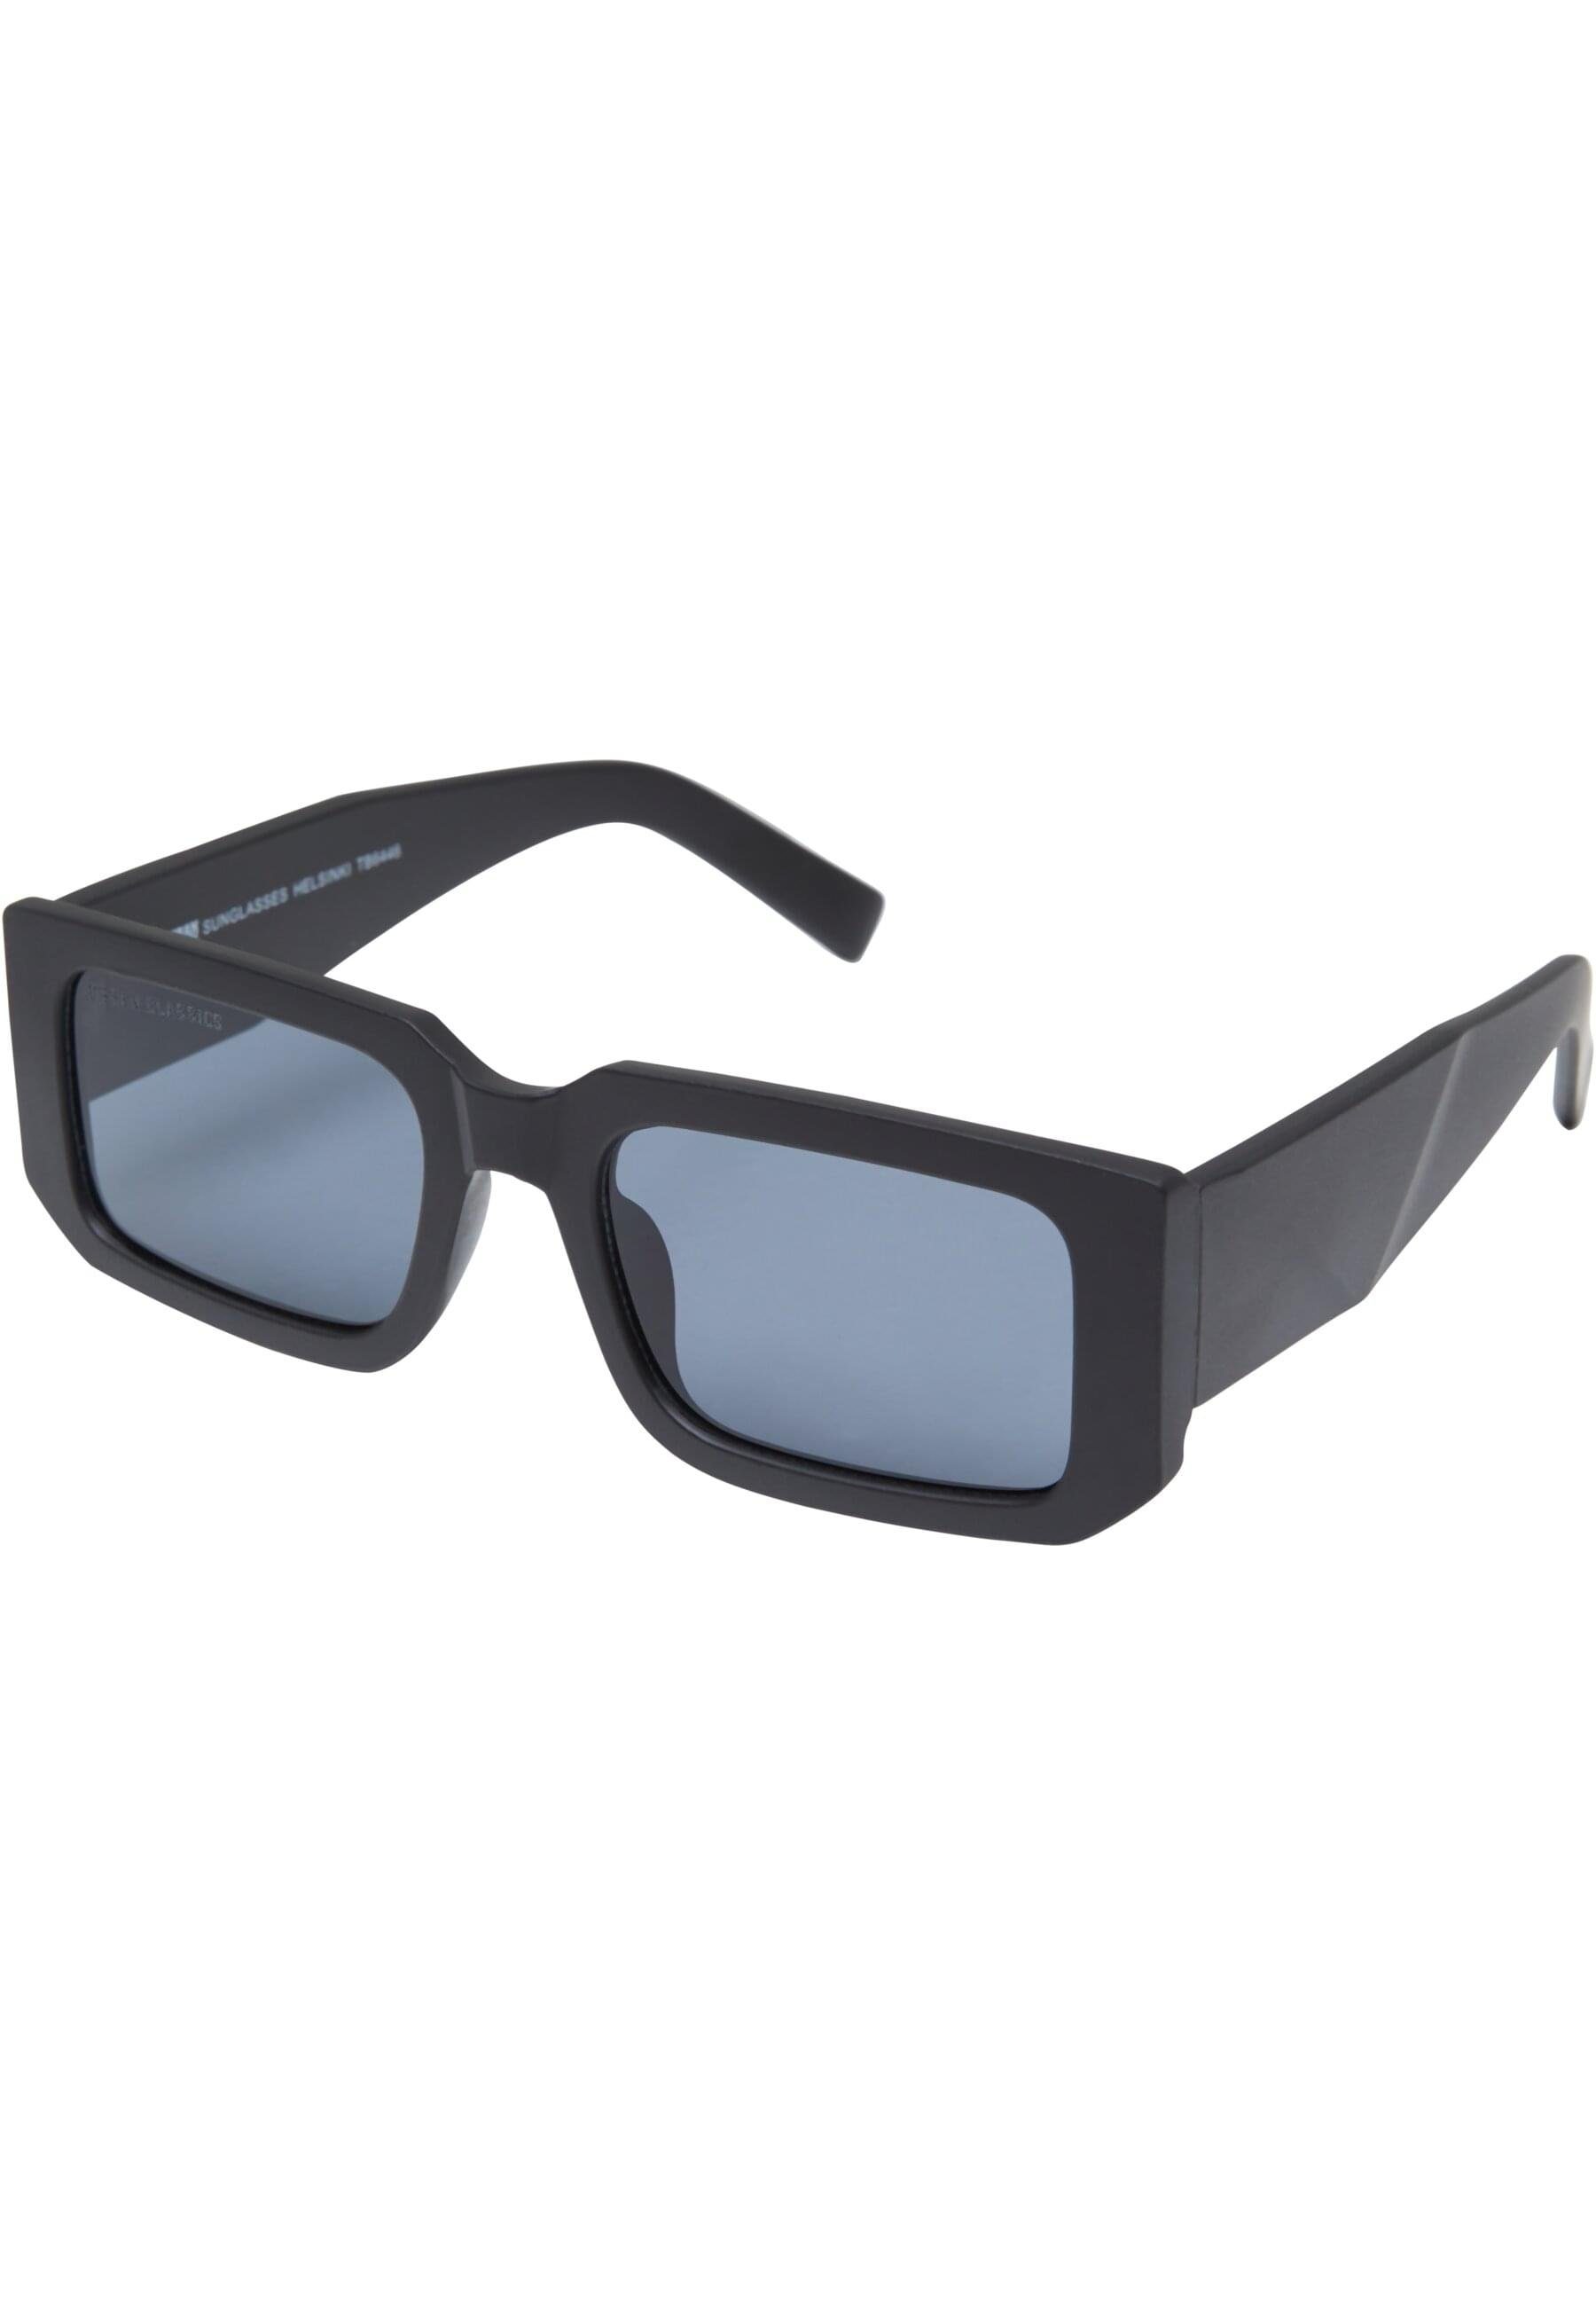 Helsinki black URBAN Unisex CLASSICS Sunglasses Sonnenbrille